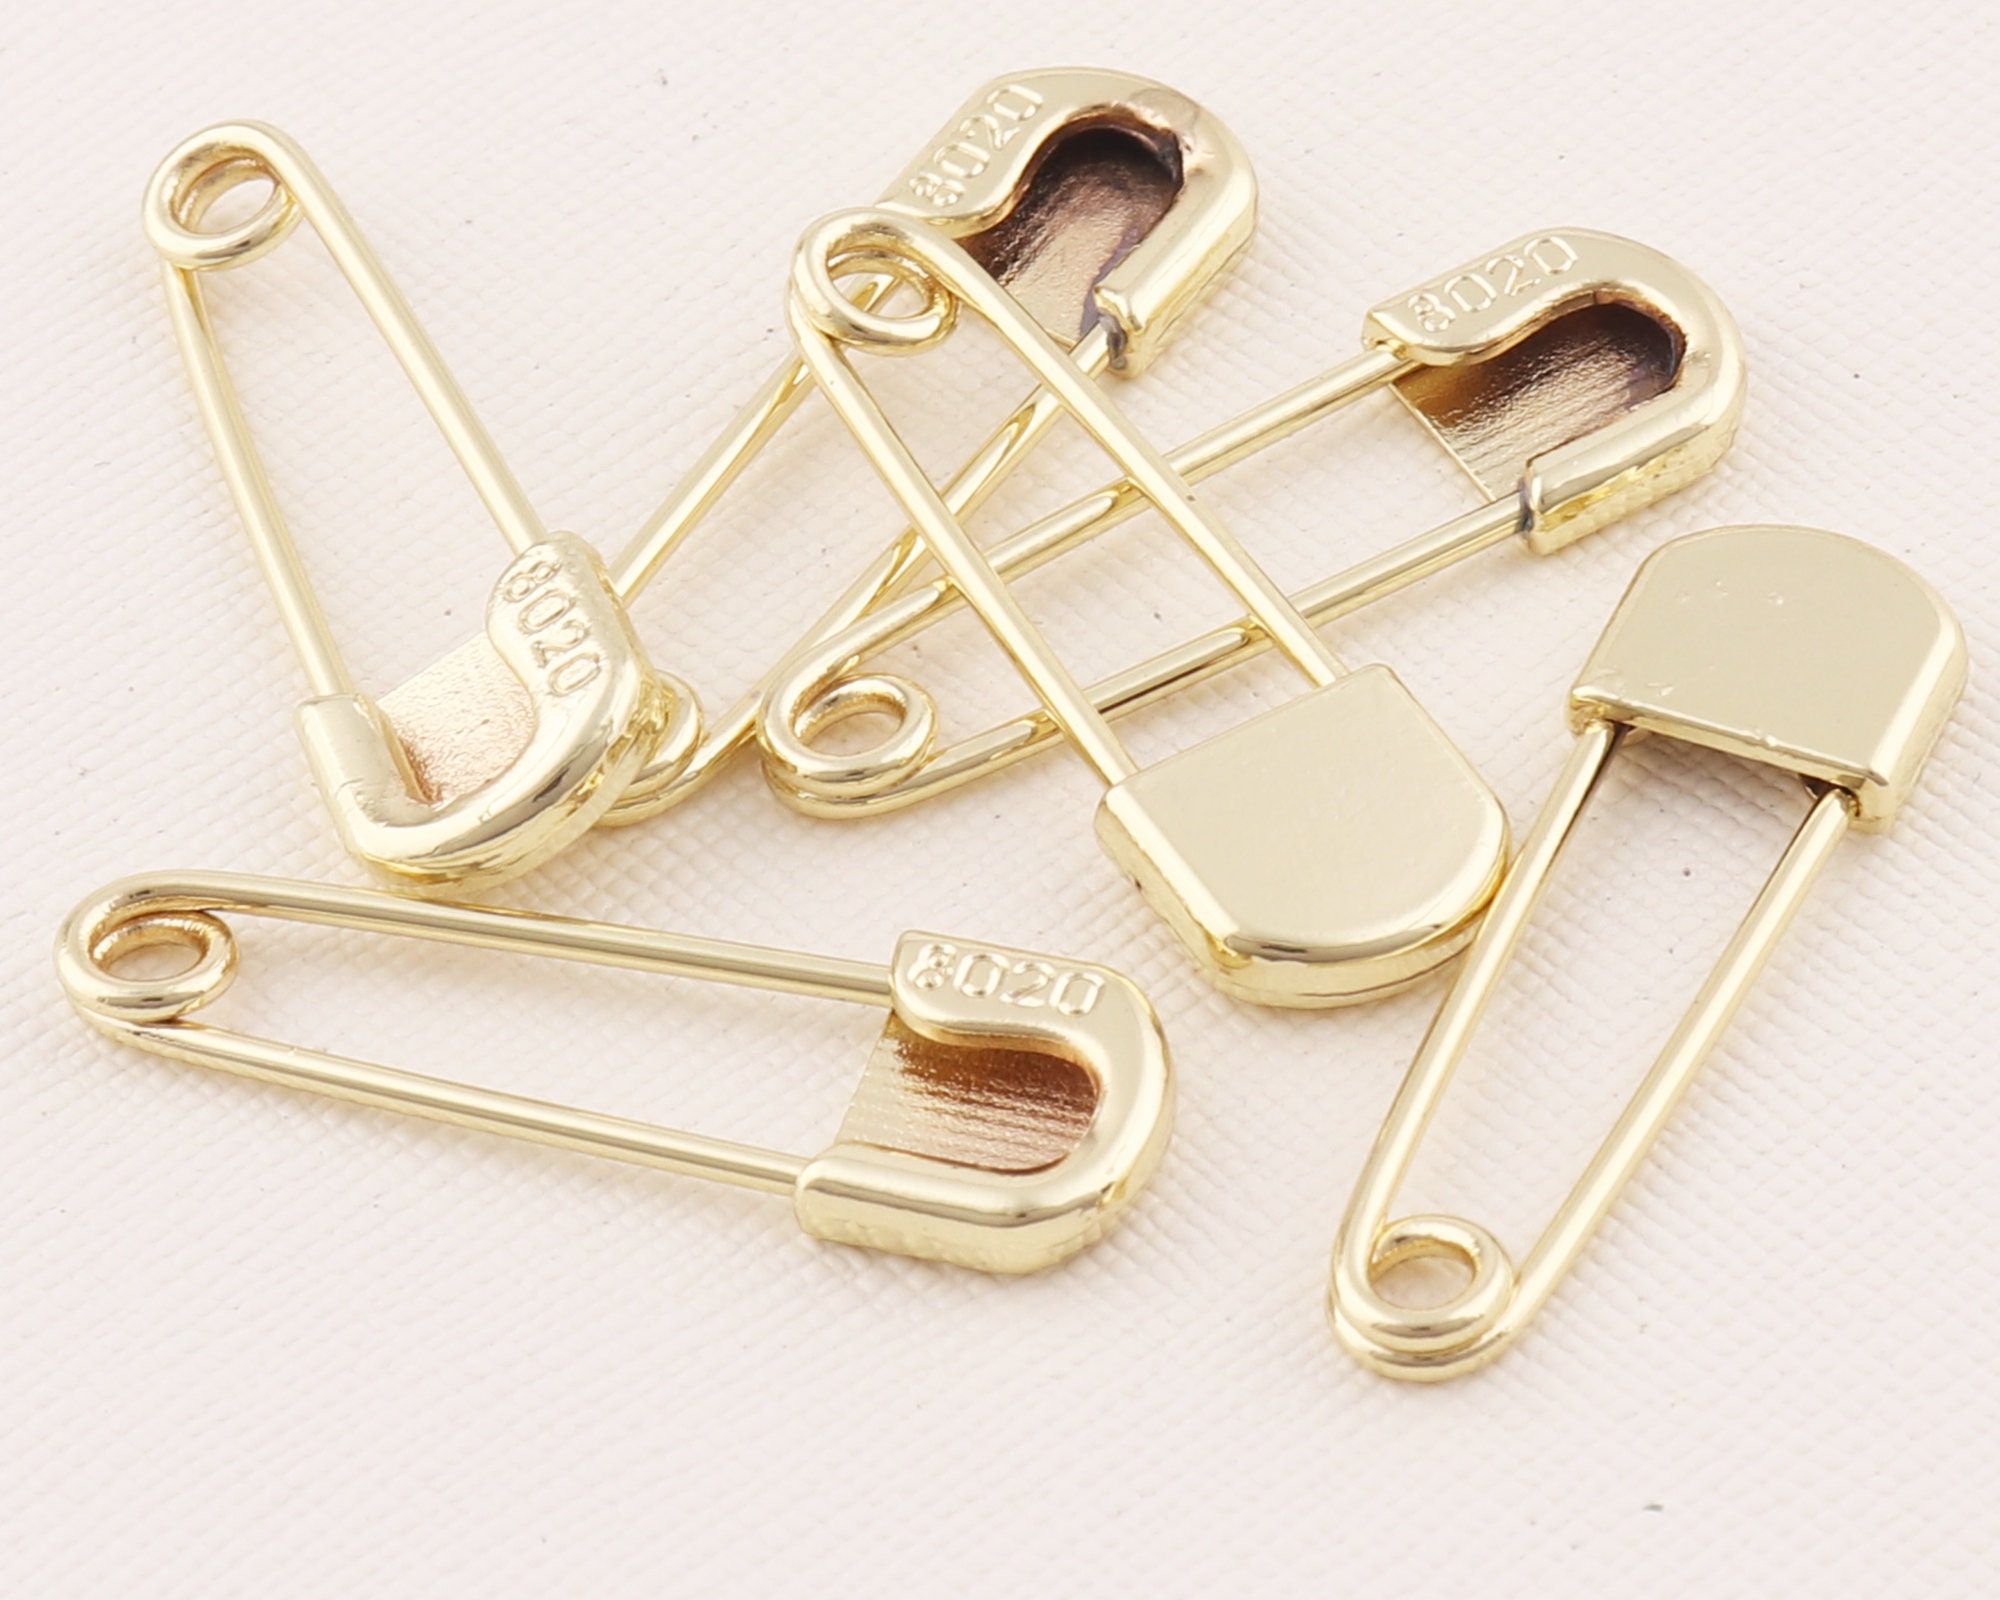 Small Safety pins Sewing pins - 35mm Brooch Stitch Markers Safety Pins  Decorative pins Sewing Safety Pins Garment Pins Holder Brooch Pin 20pcs  (Light